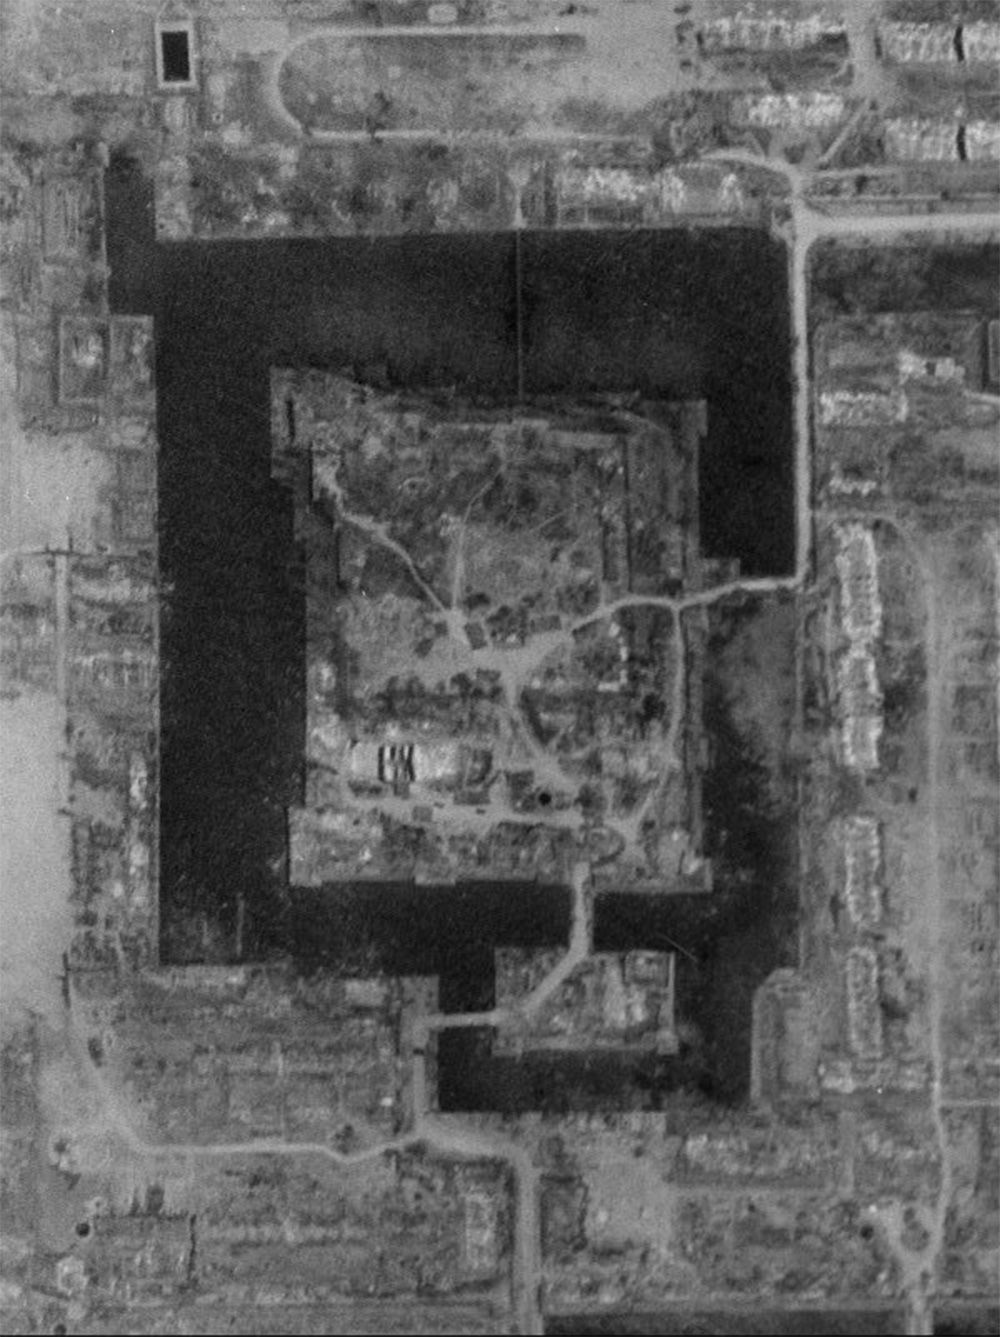 原爆投下直後の広島城